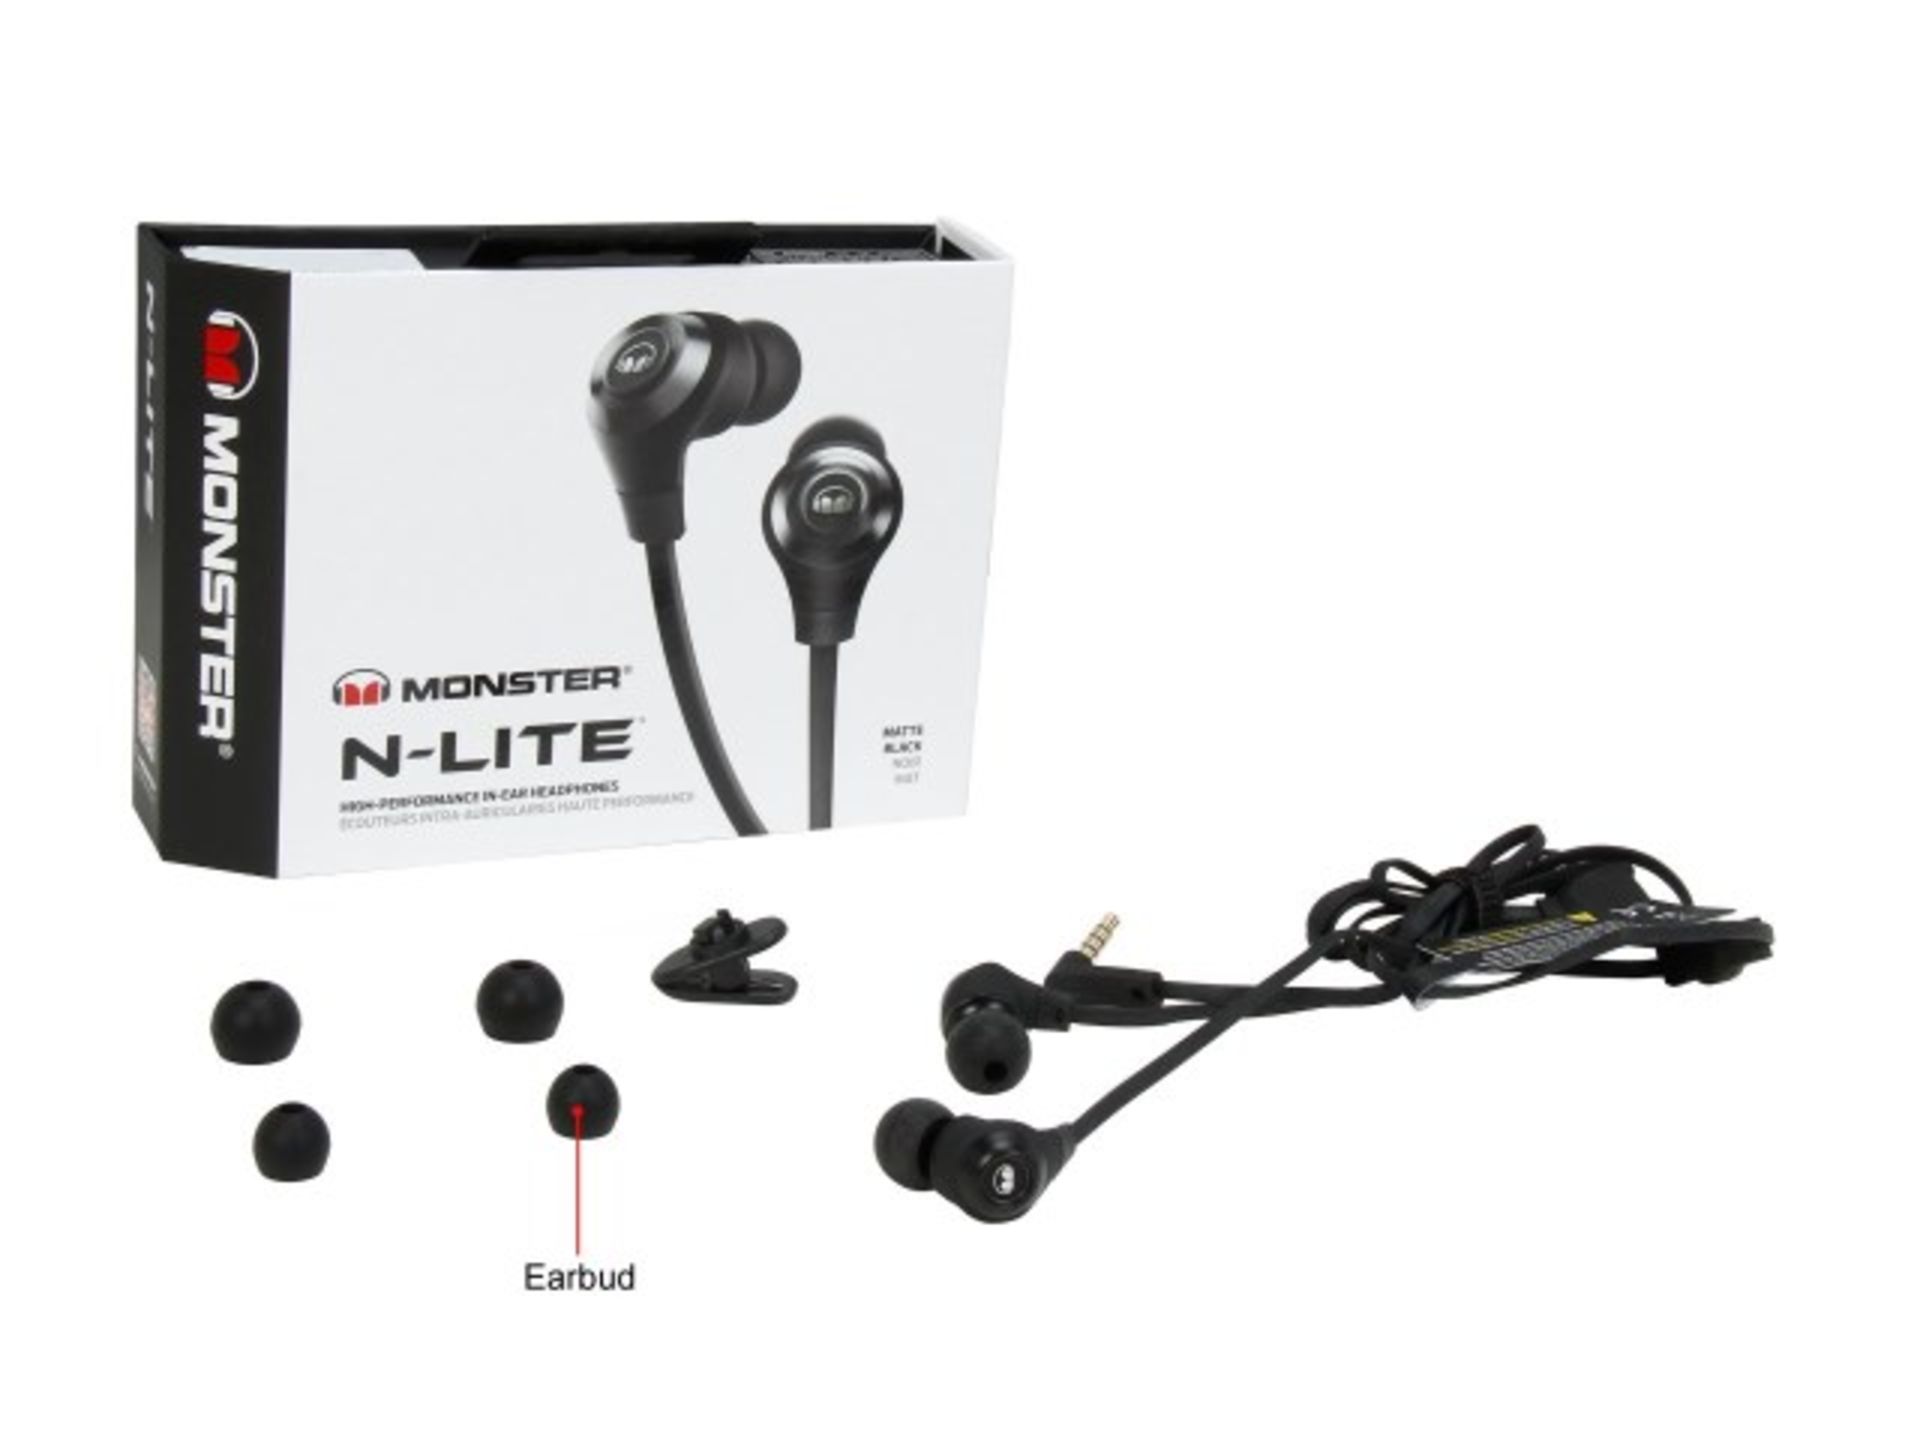 V Brand New Monster N-Lite High Performance In-Ear Headphones In Black X 3 Bid price to be